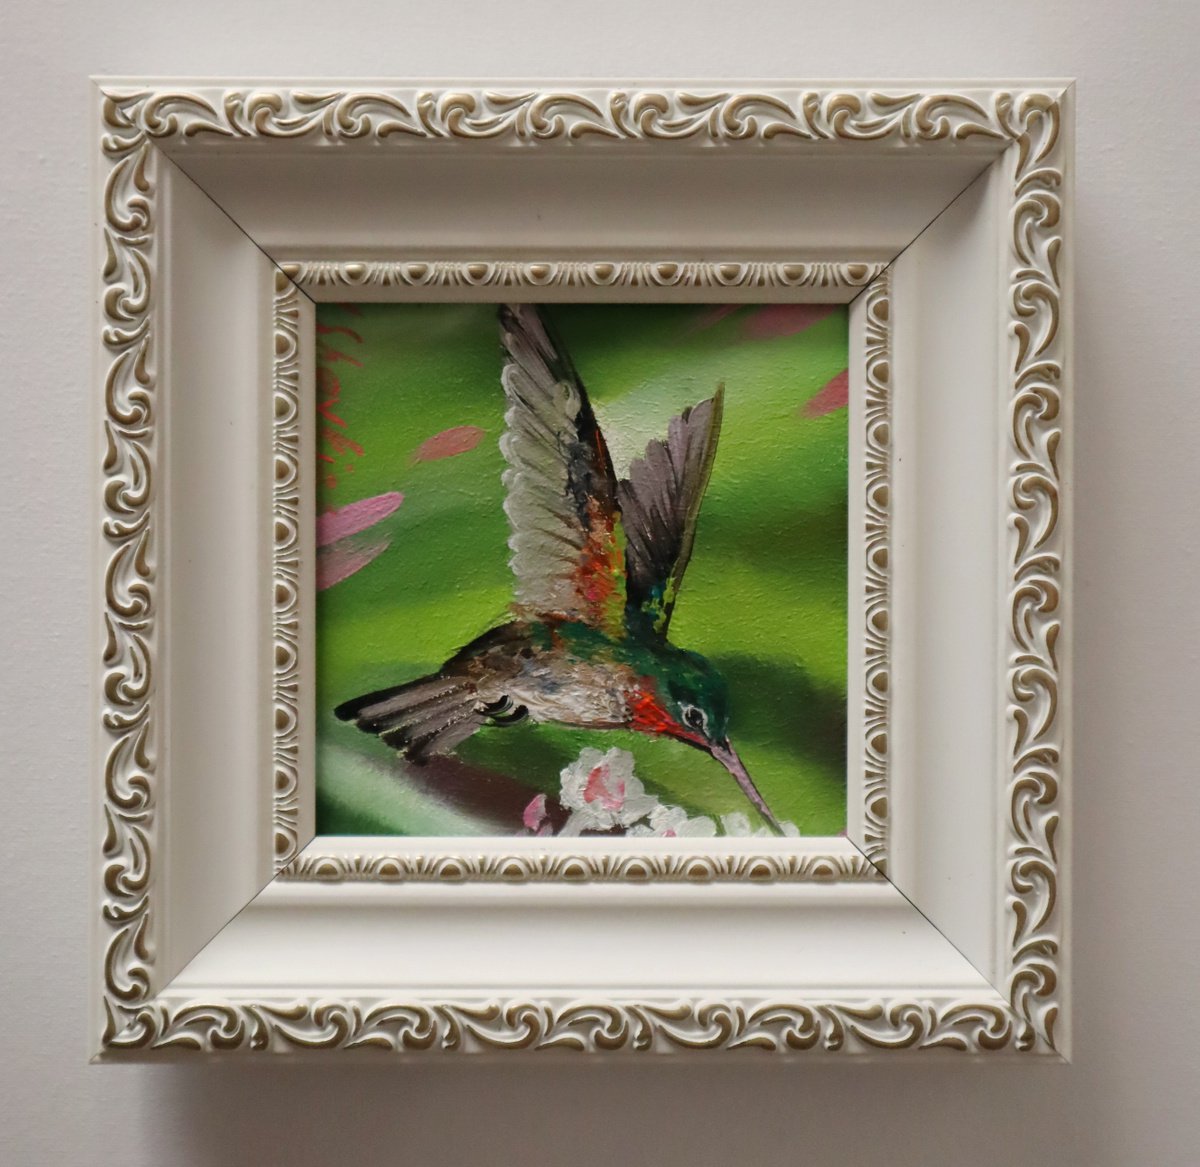 Original Painting of Hummingbird, Artwork framed 4x4 (10x10 cm), Backyard Birds Wall Art by Natalia Shaykina